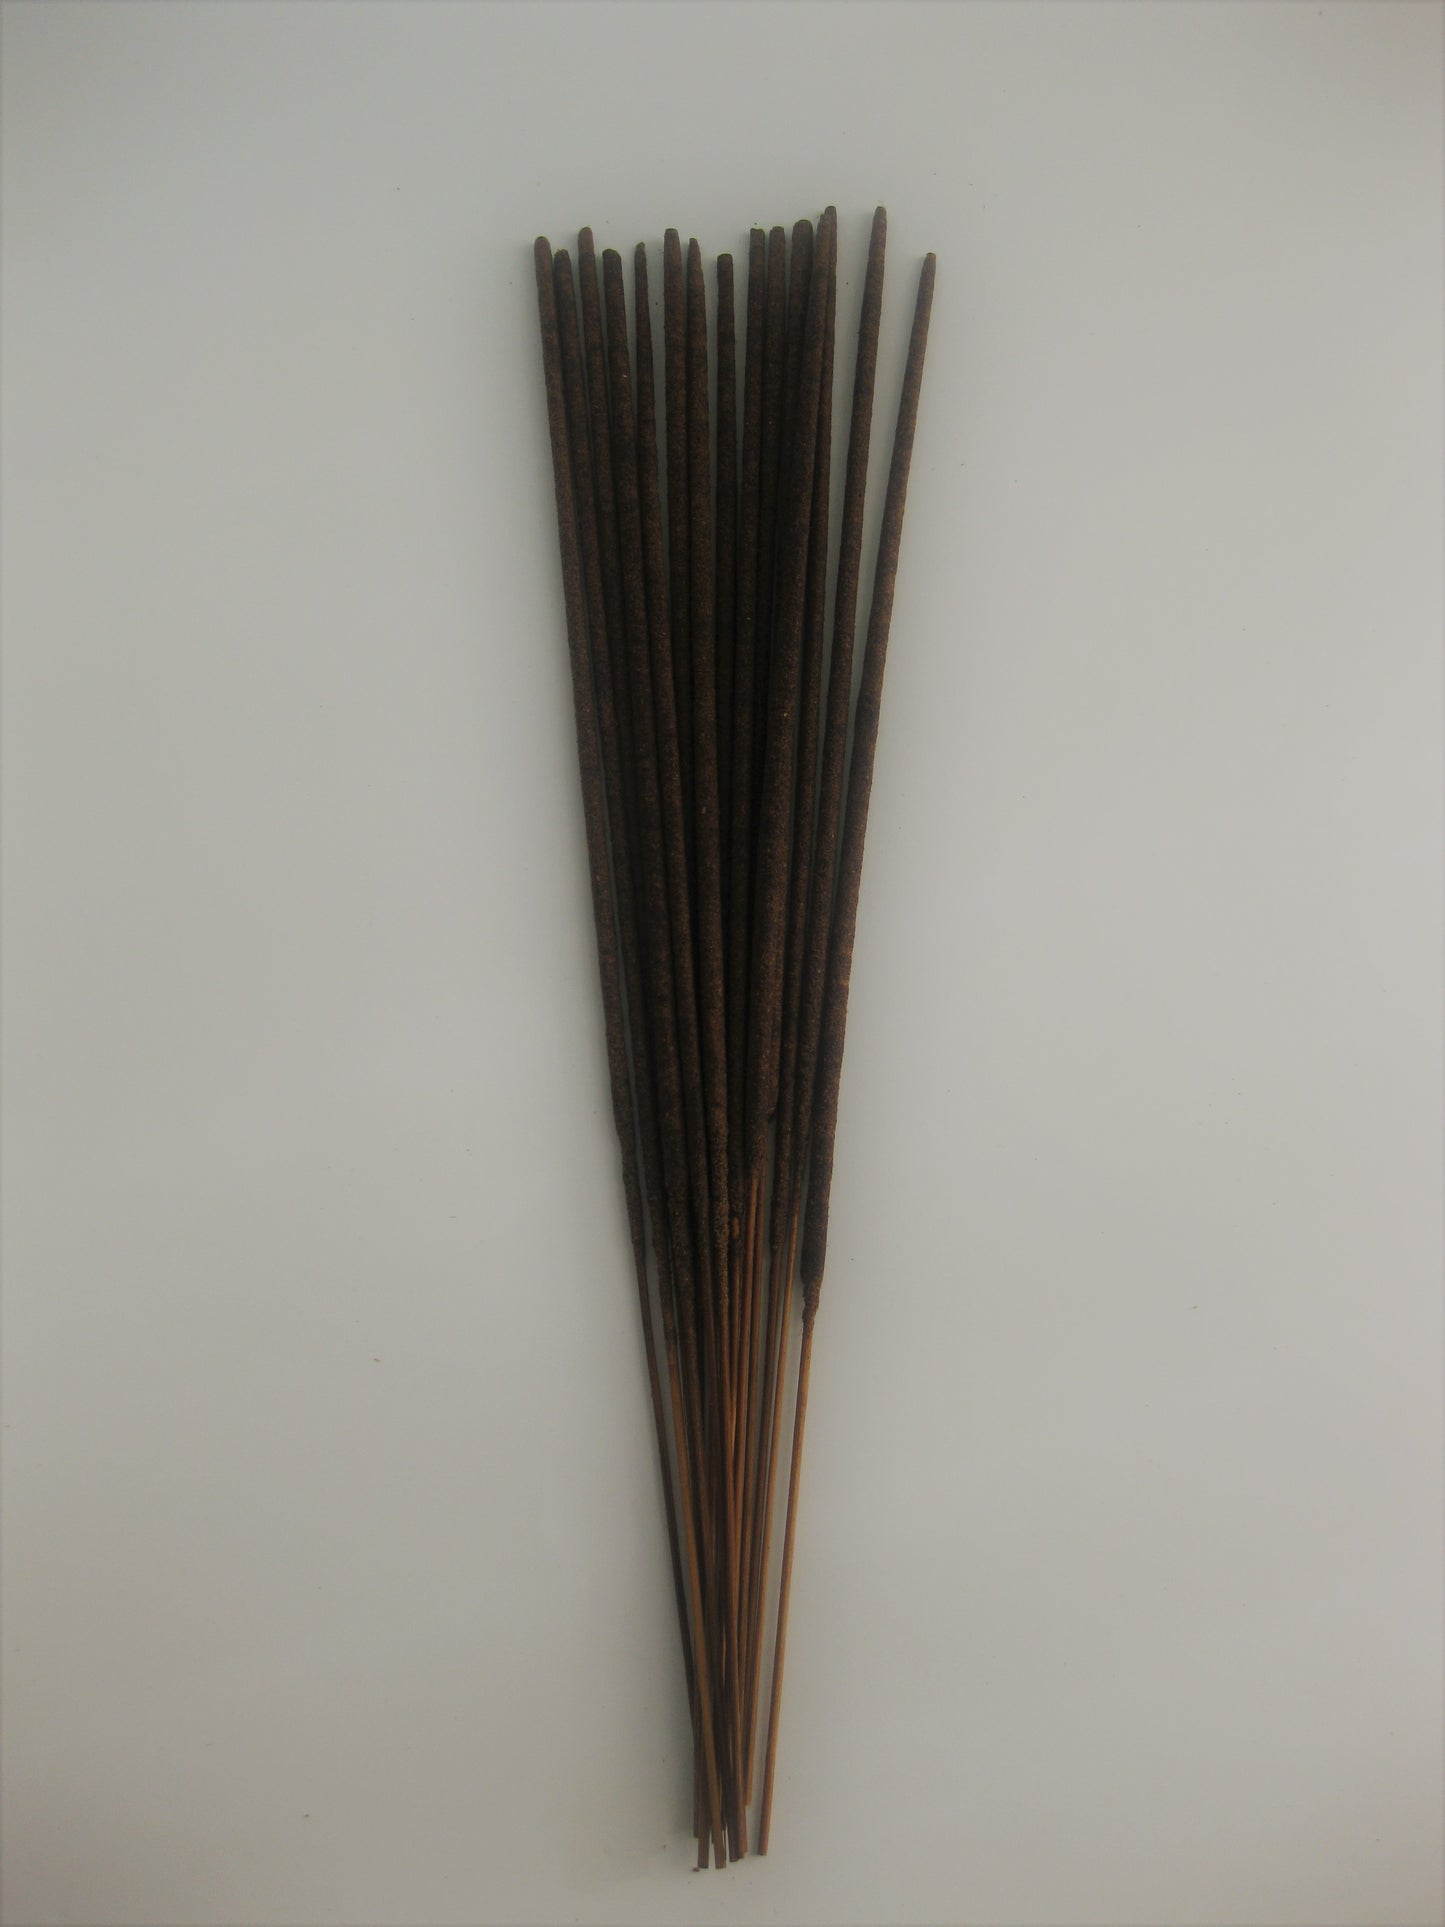 Clove Incense Sticks